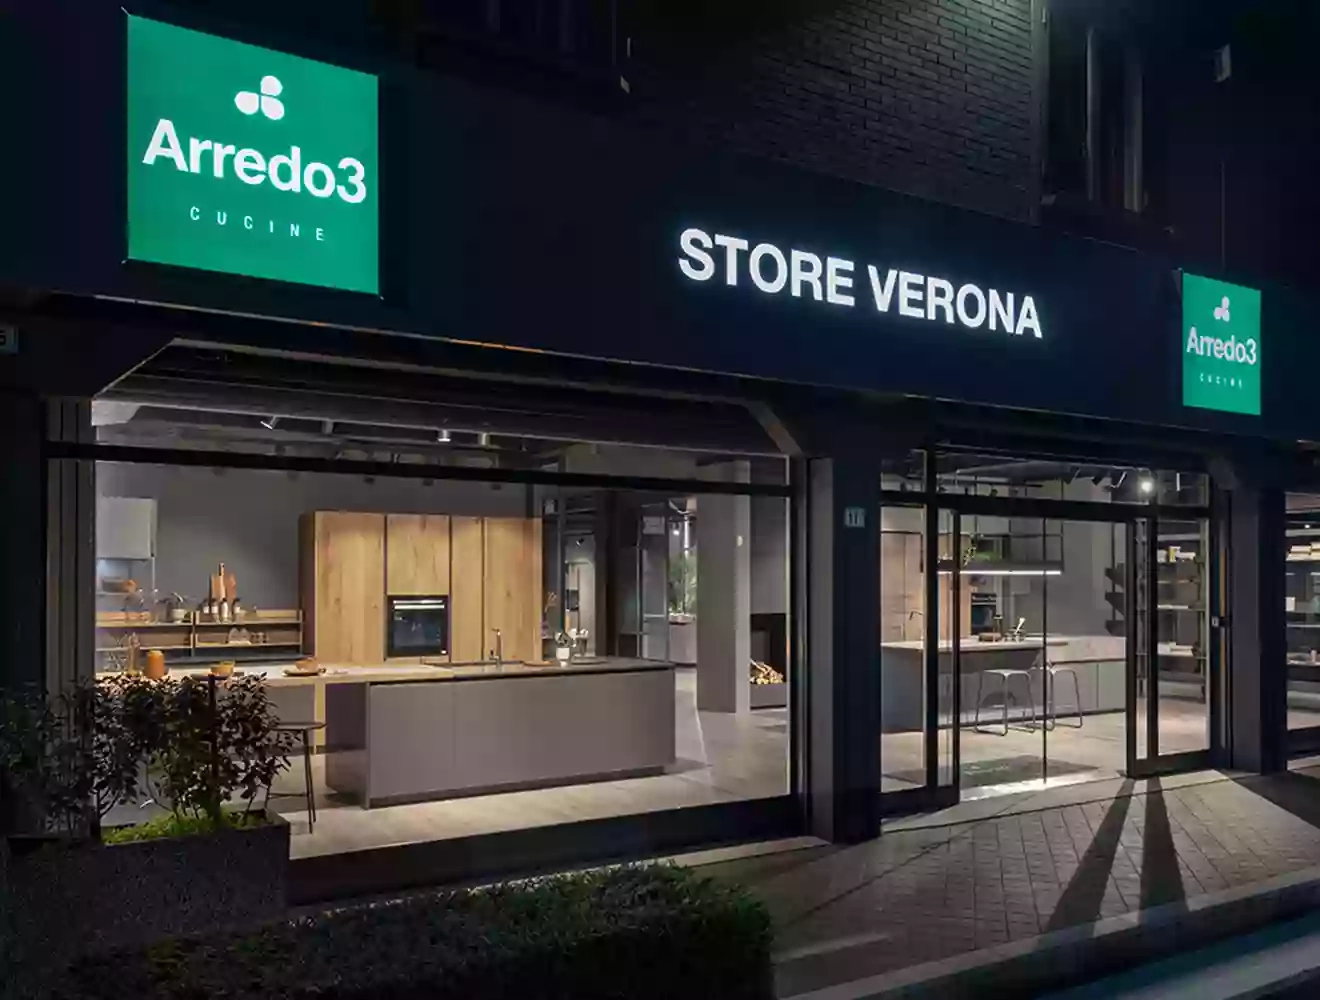 Arredo3 Cucine Store Verona